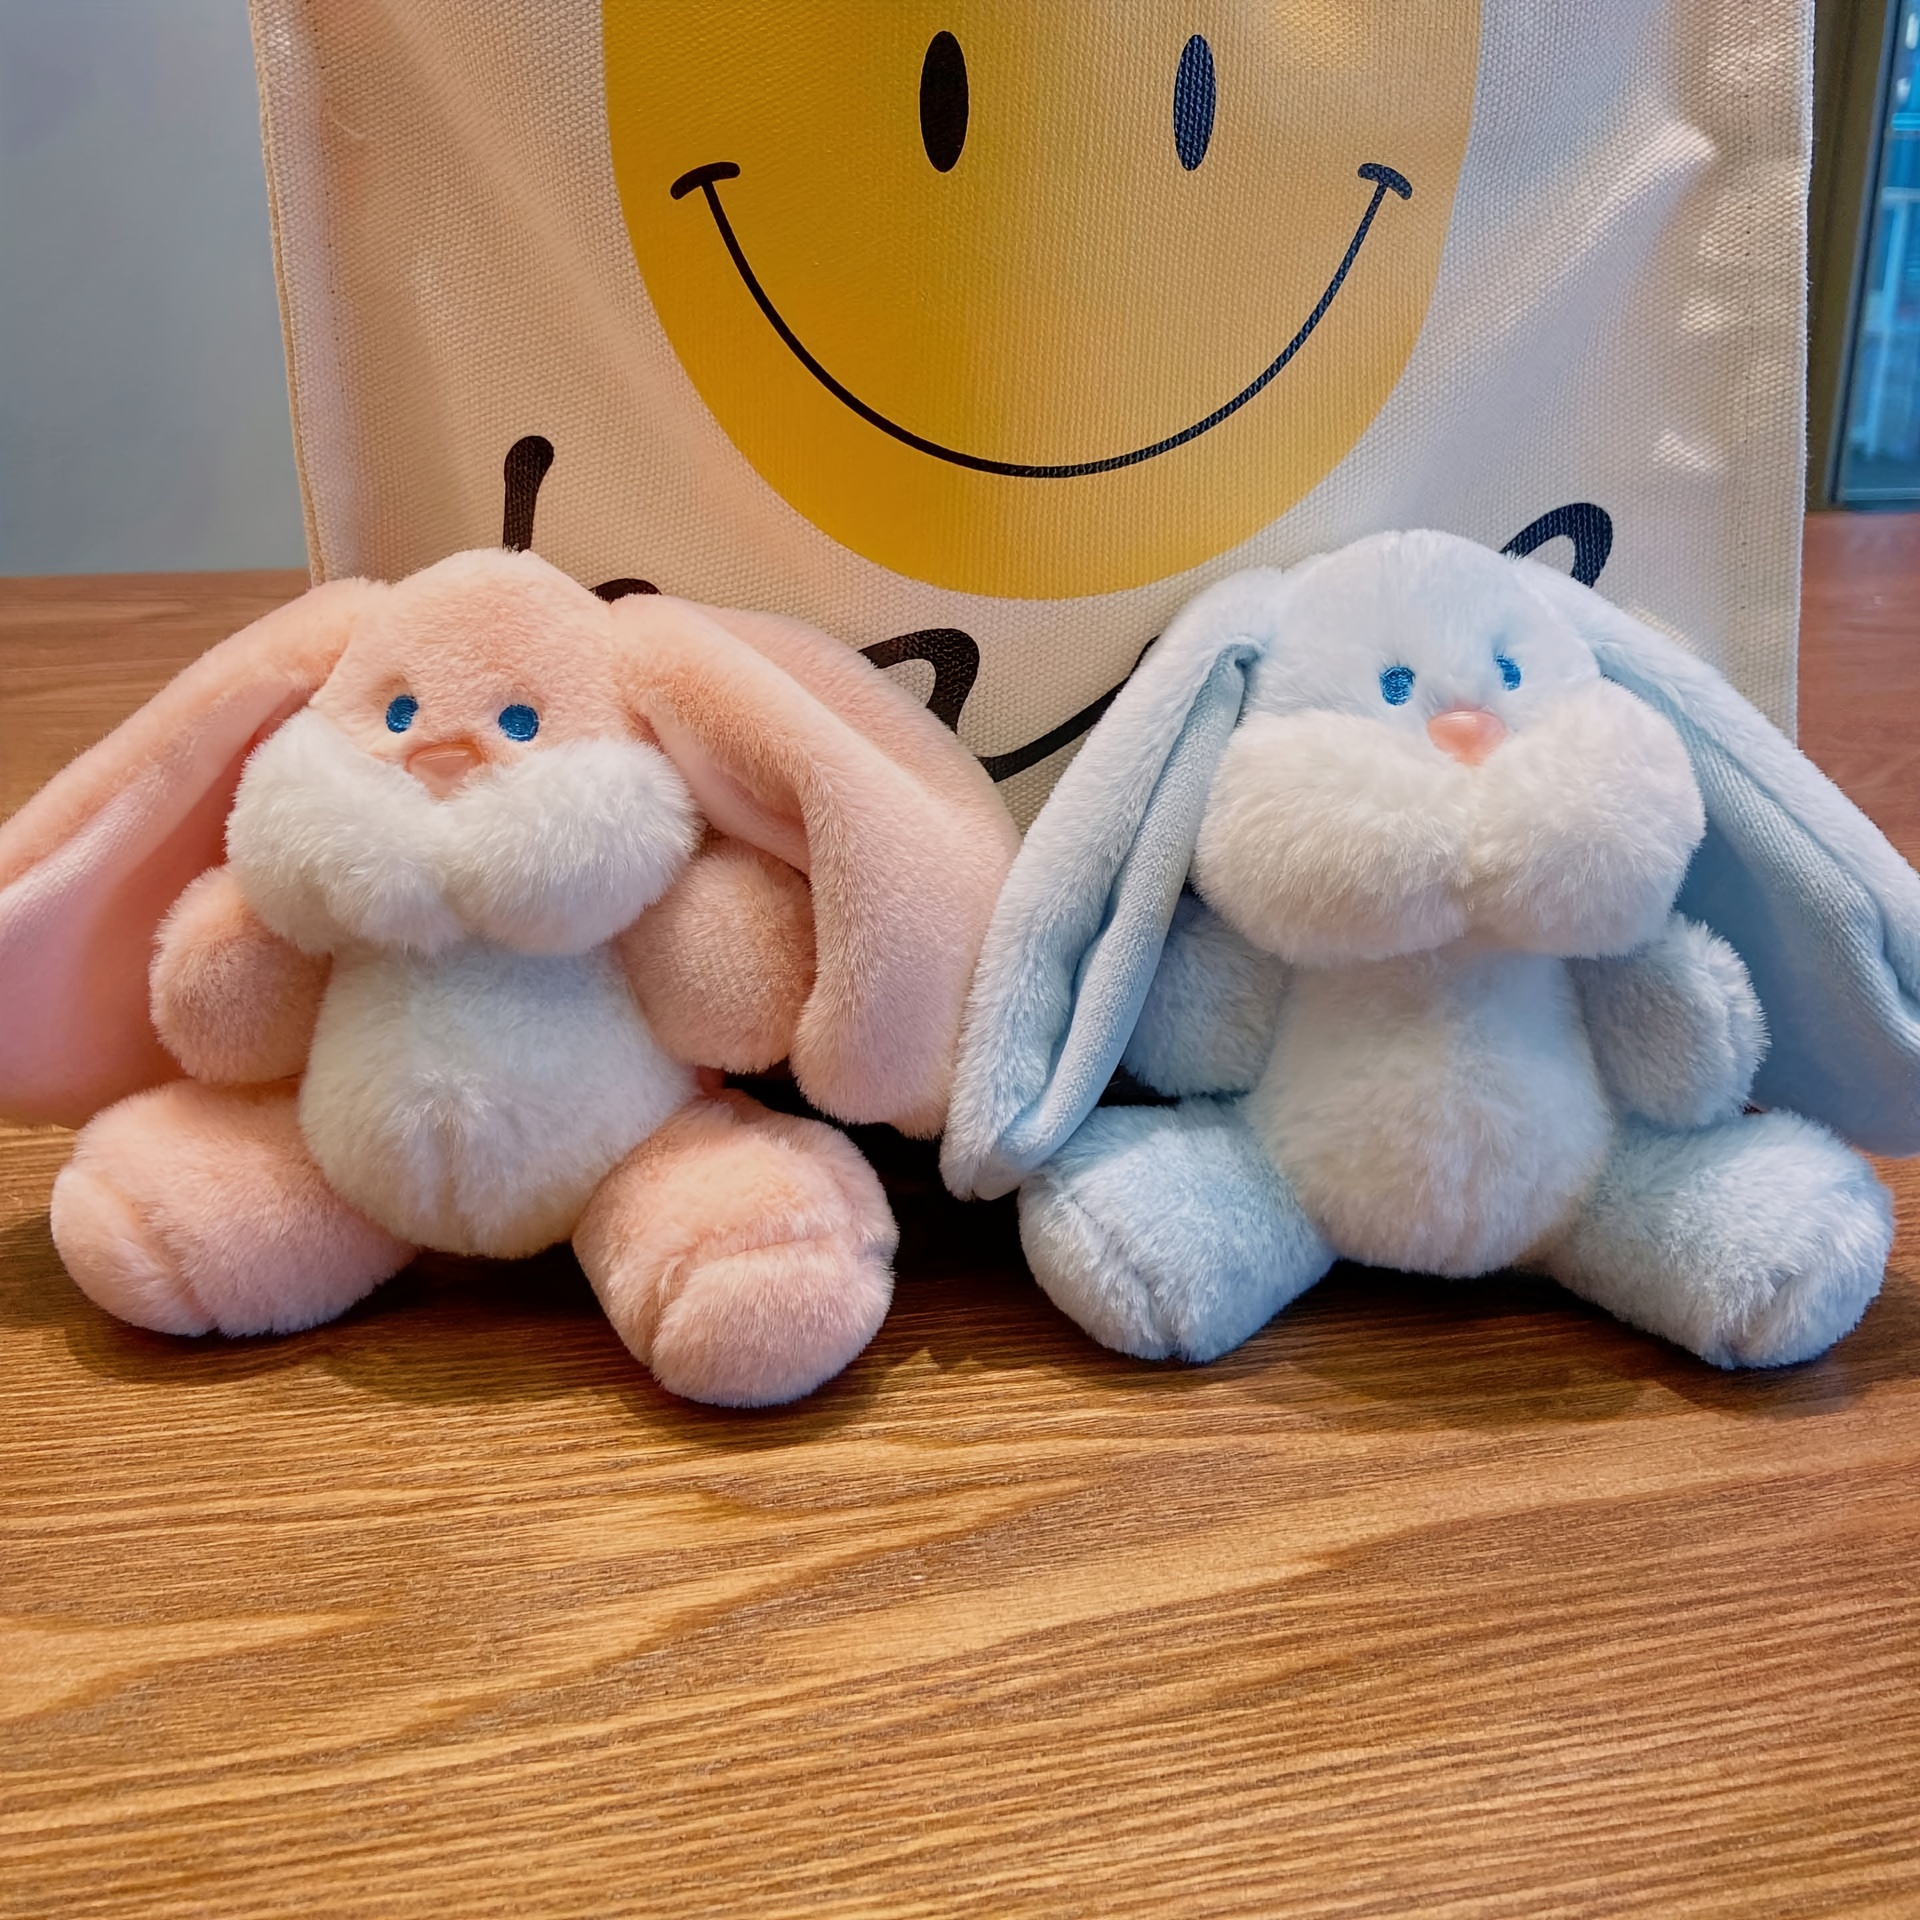 Cute Rabbit Student Schoolbag Pendant Imitation Otter Rabbit Keychain  Women's Handbag Accessories Gift for Girlfriend Wholesale